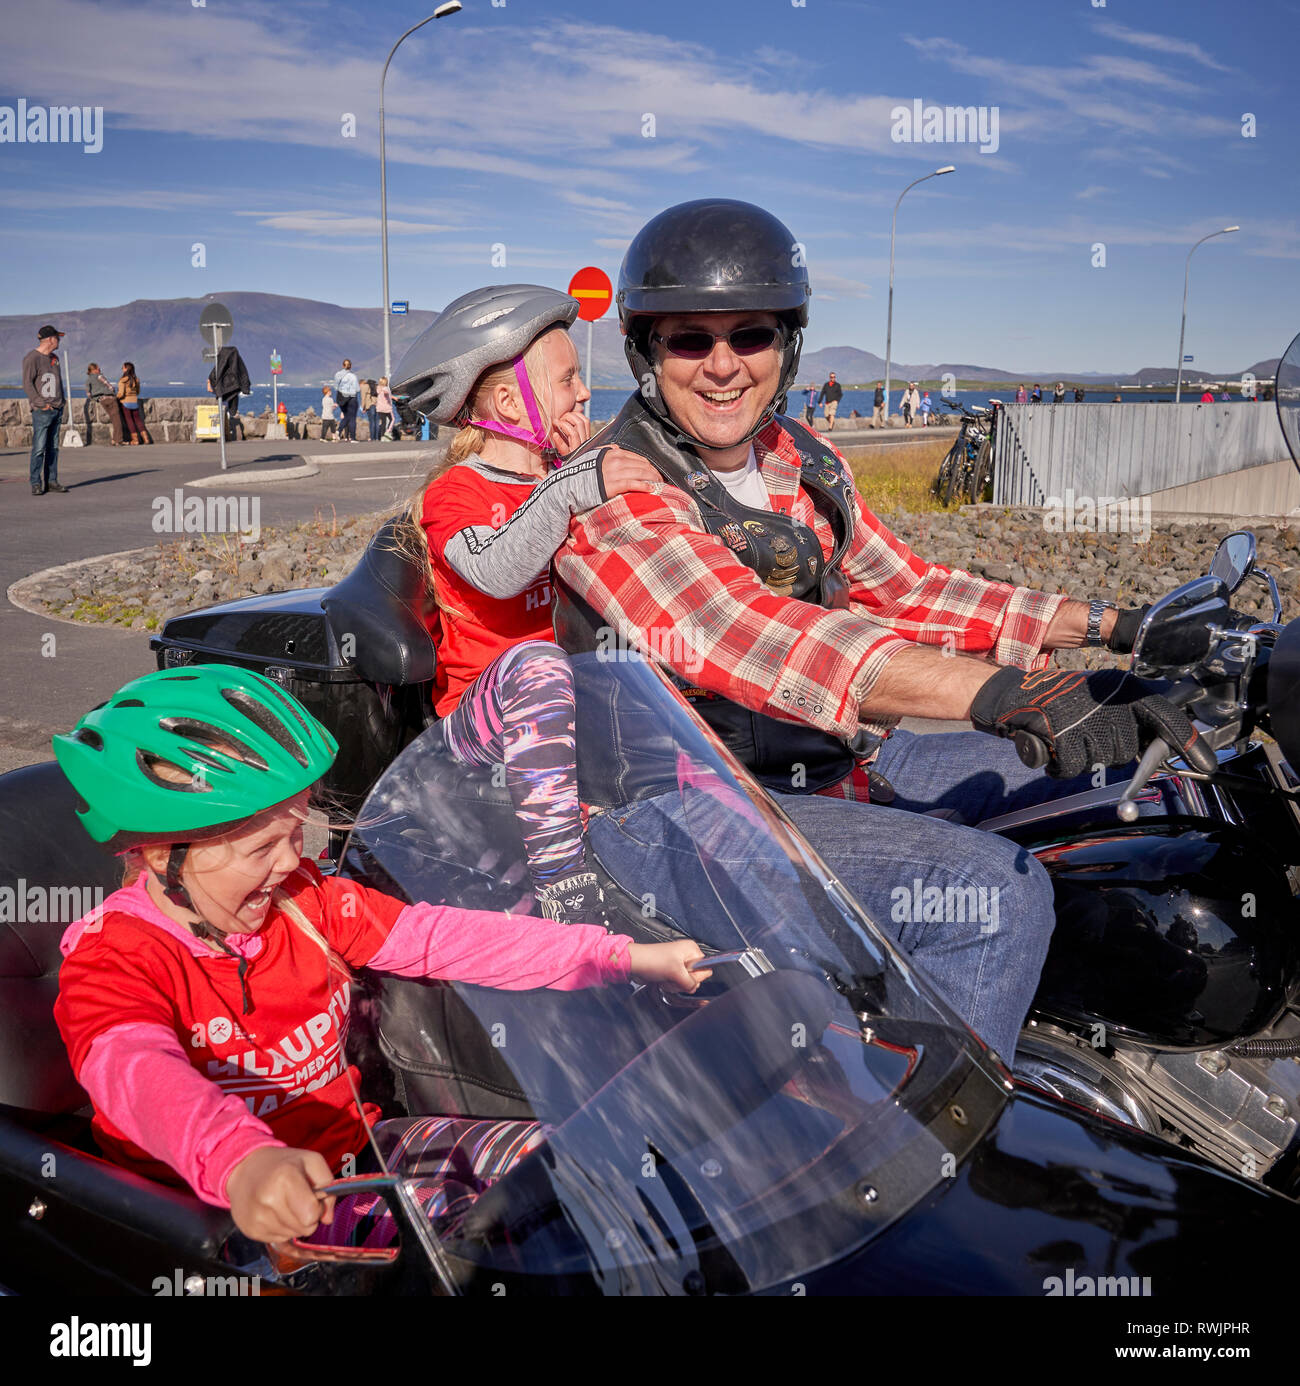 Man and children on a motorbike, Reykjavik, Iceland Stock Photo